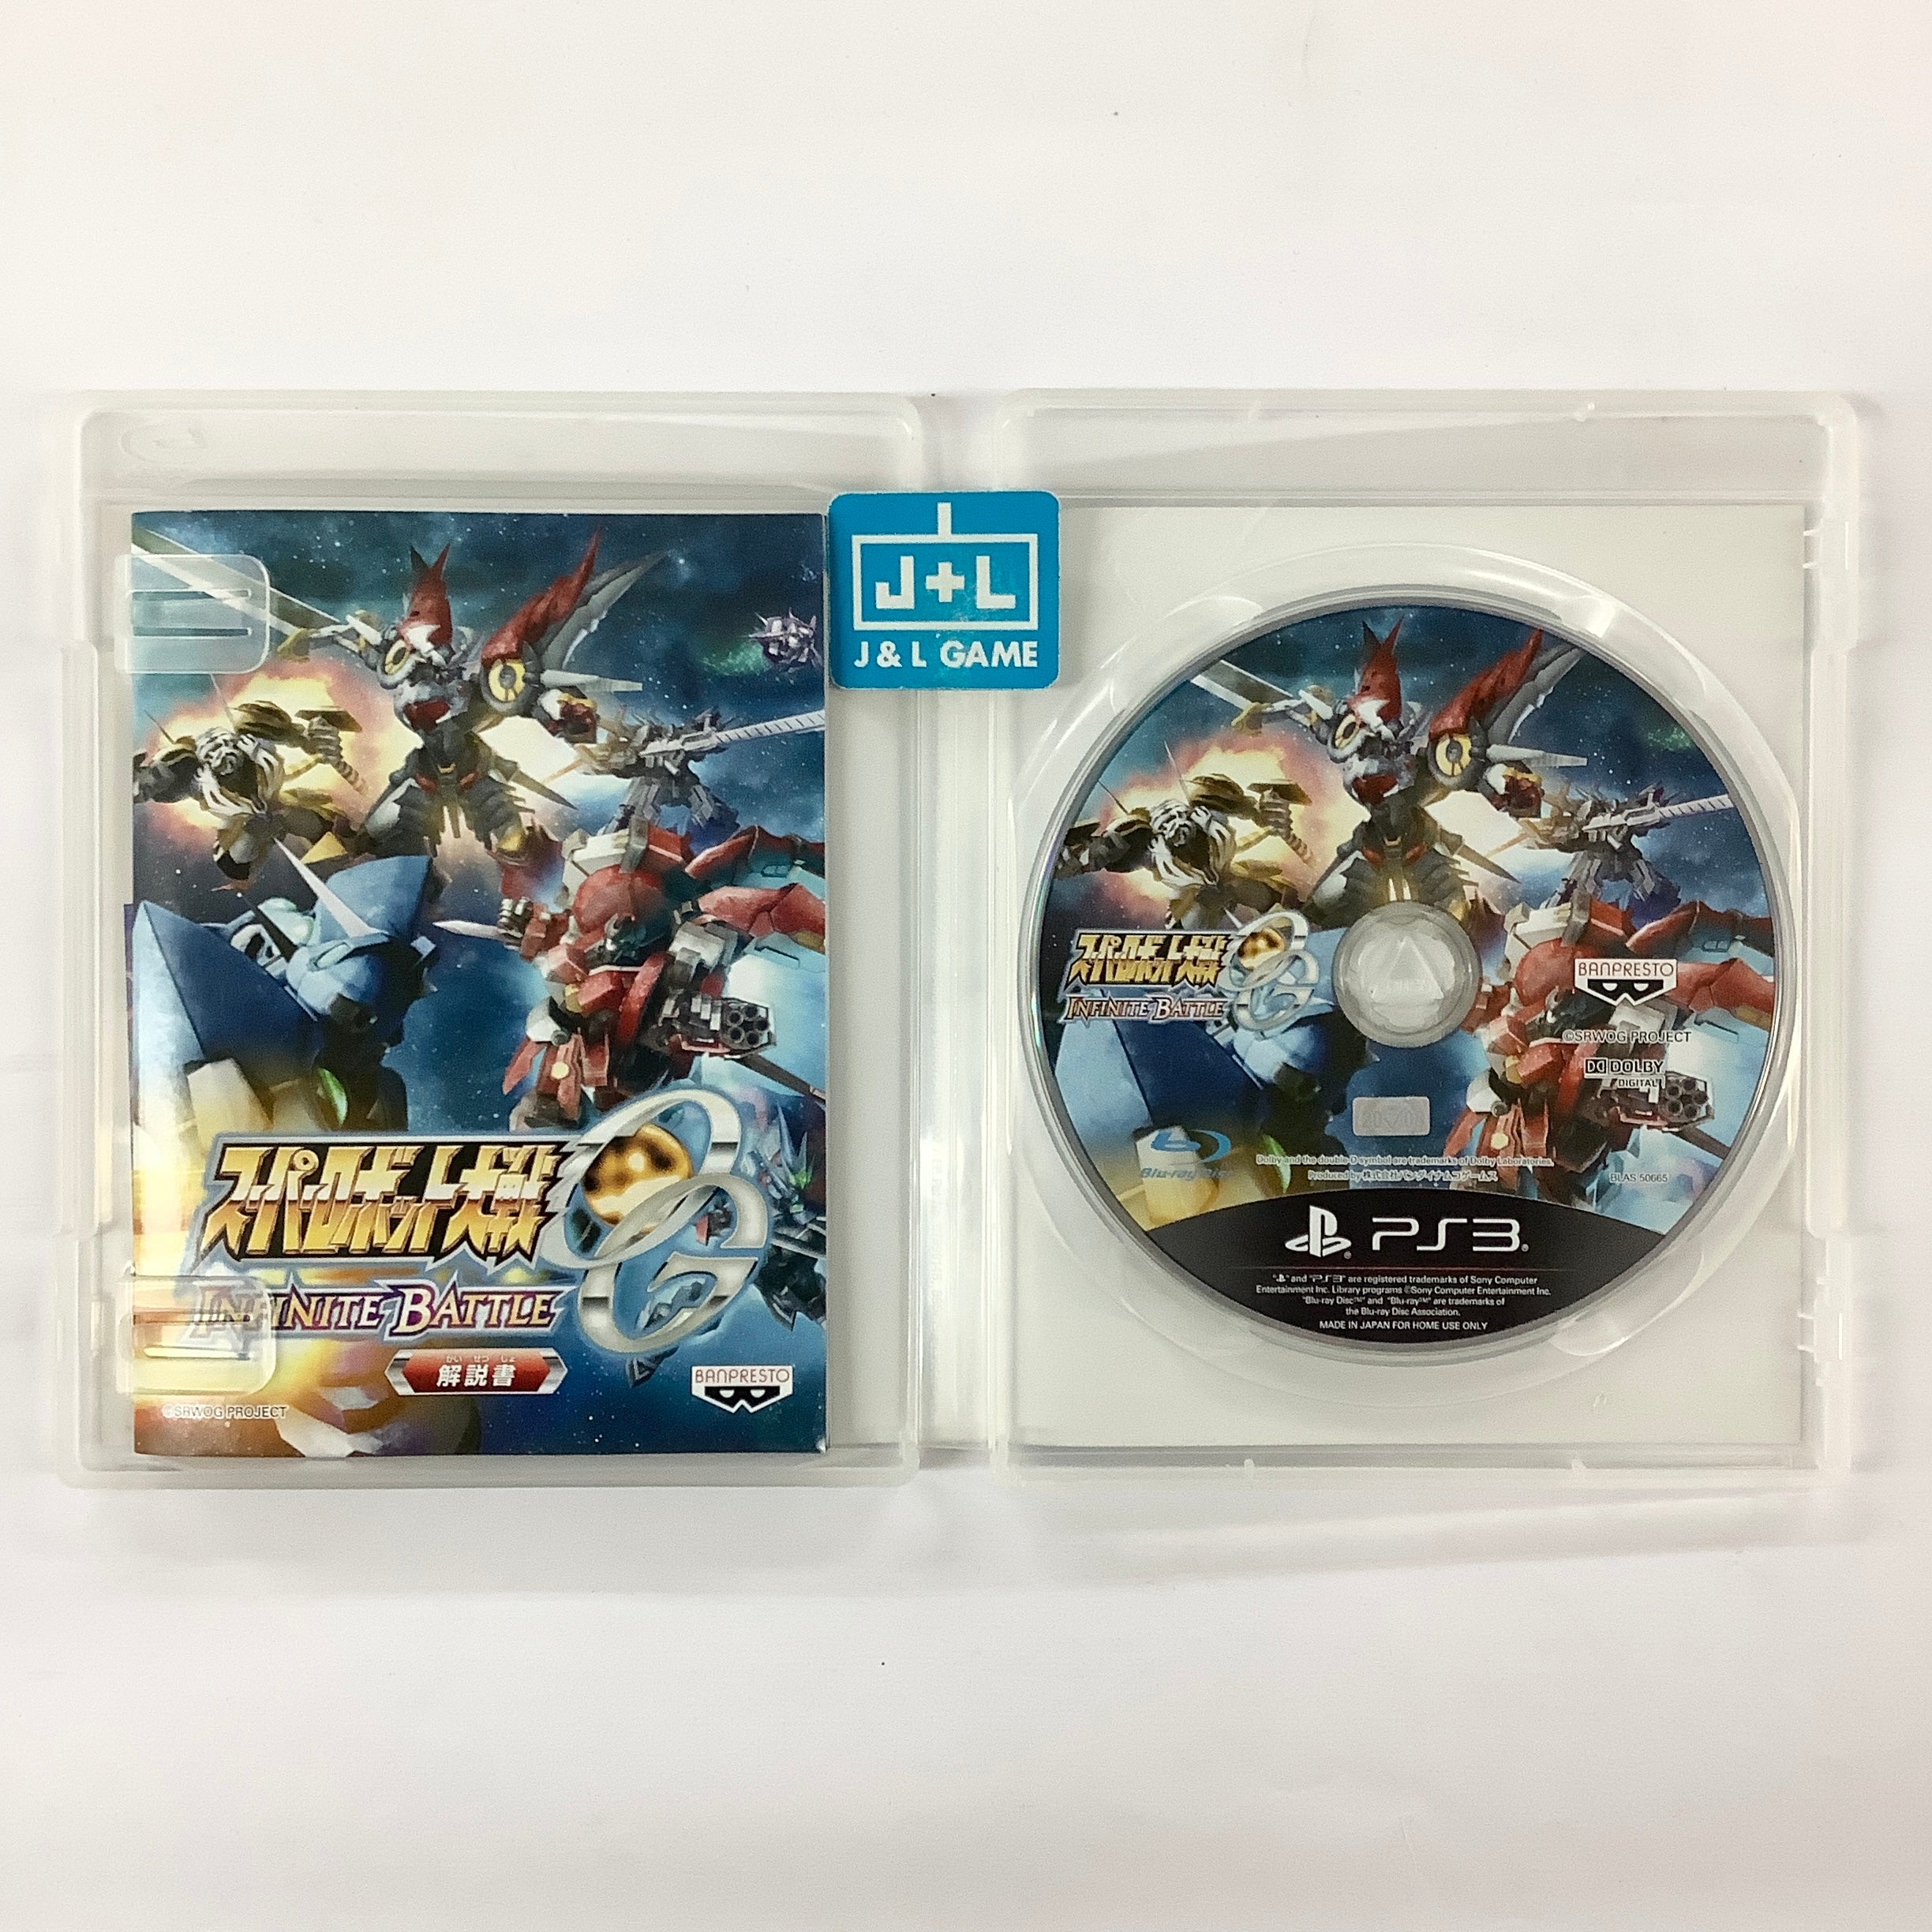 Super Robot Taisen OG Infinite Battle & Super Robot Taisen OG Dark Prison - (PS3) PlayStation 3 [Pre-Owned] (Asia Import) Video Games Bandai Namco Games   